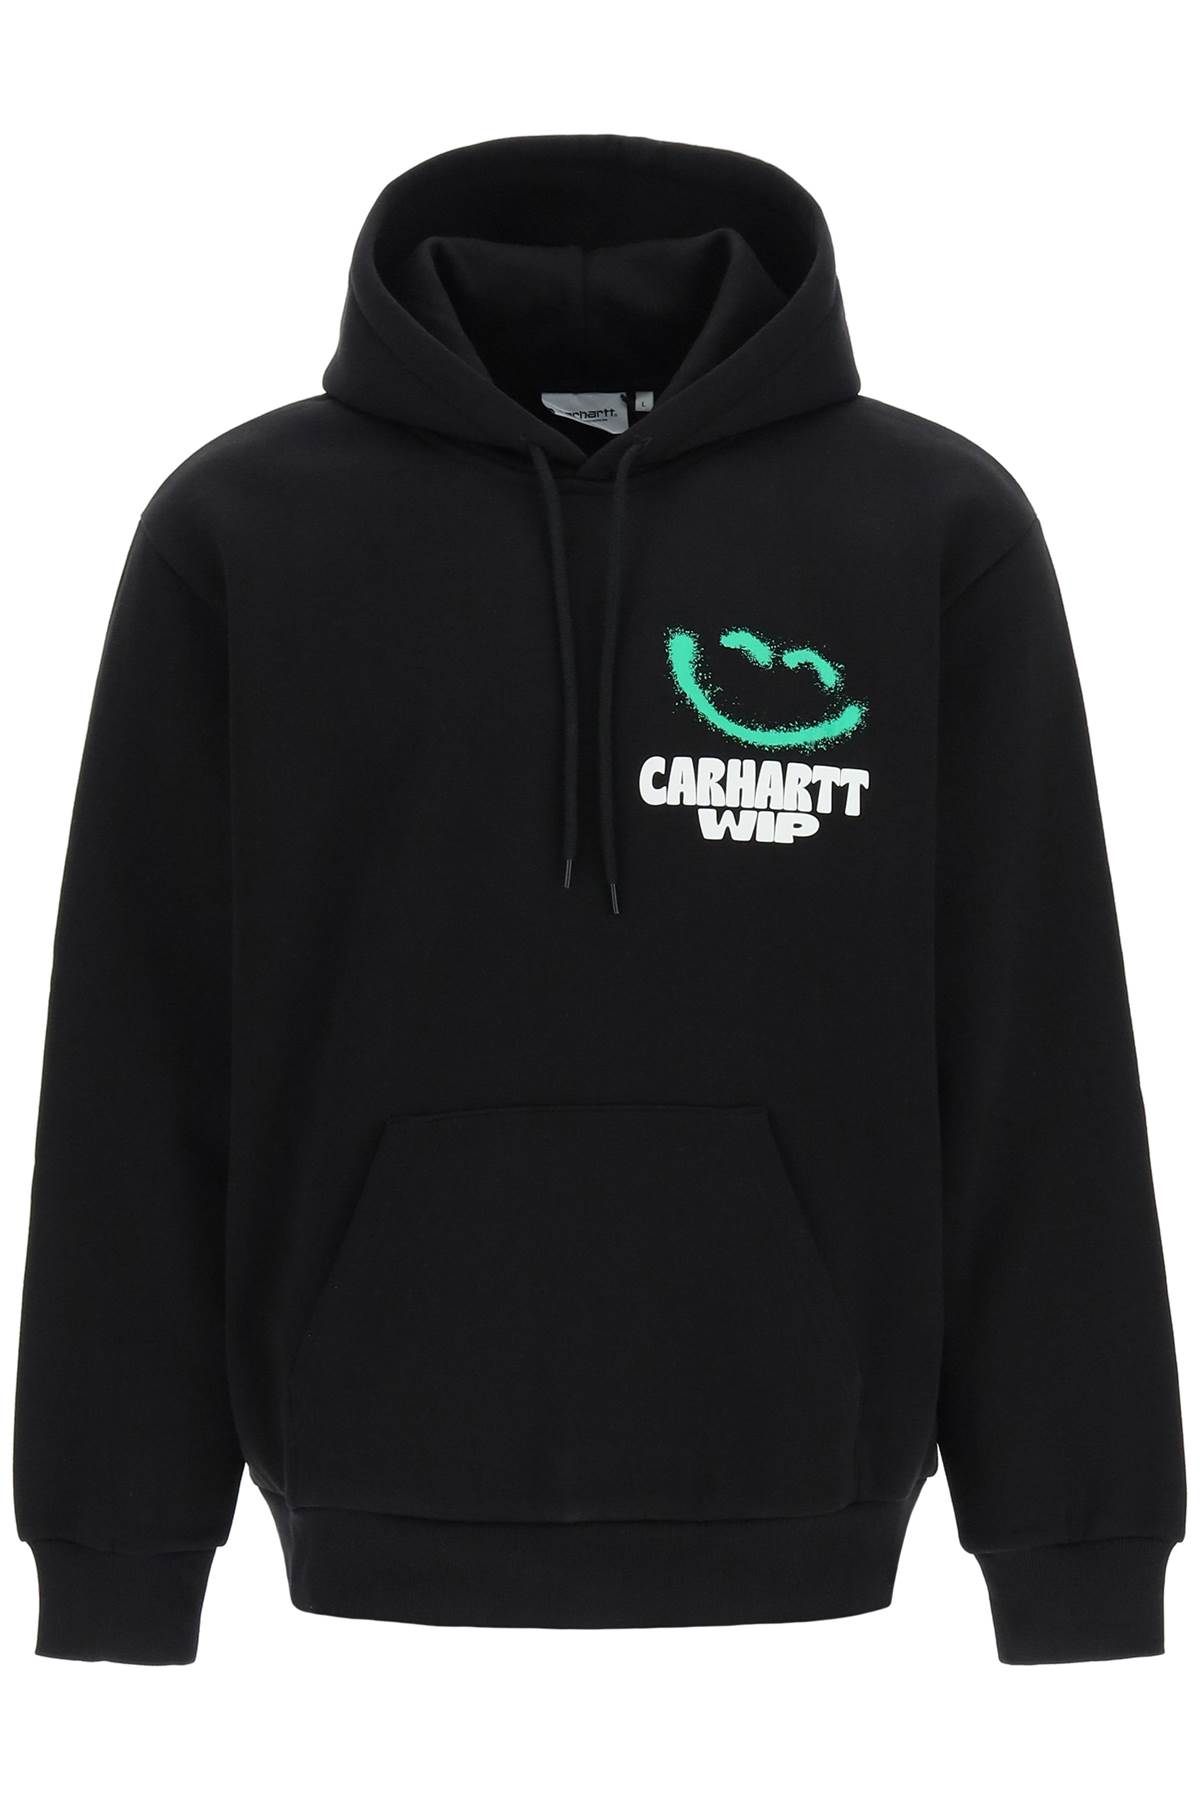 Carhartt Happy Script Hooded Sweatshirt